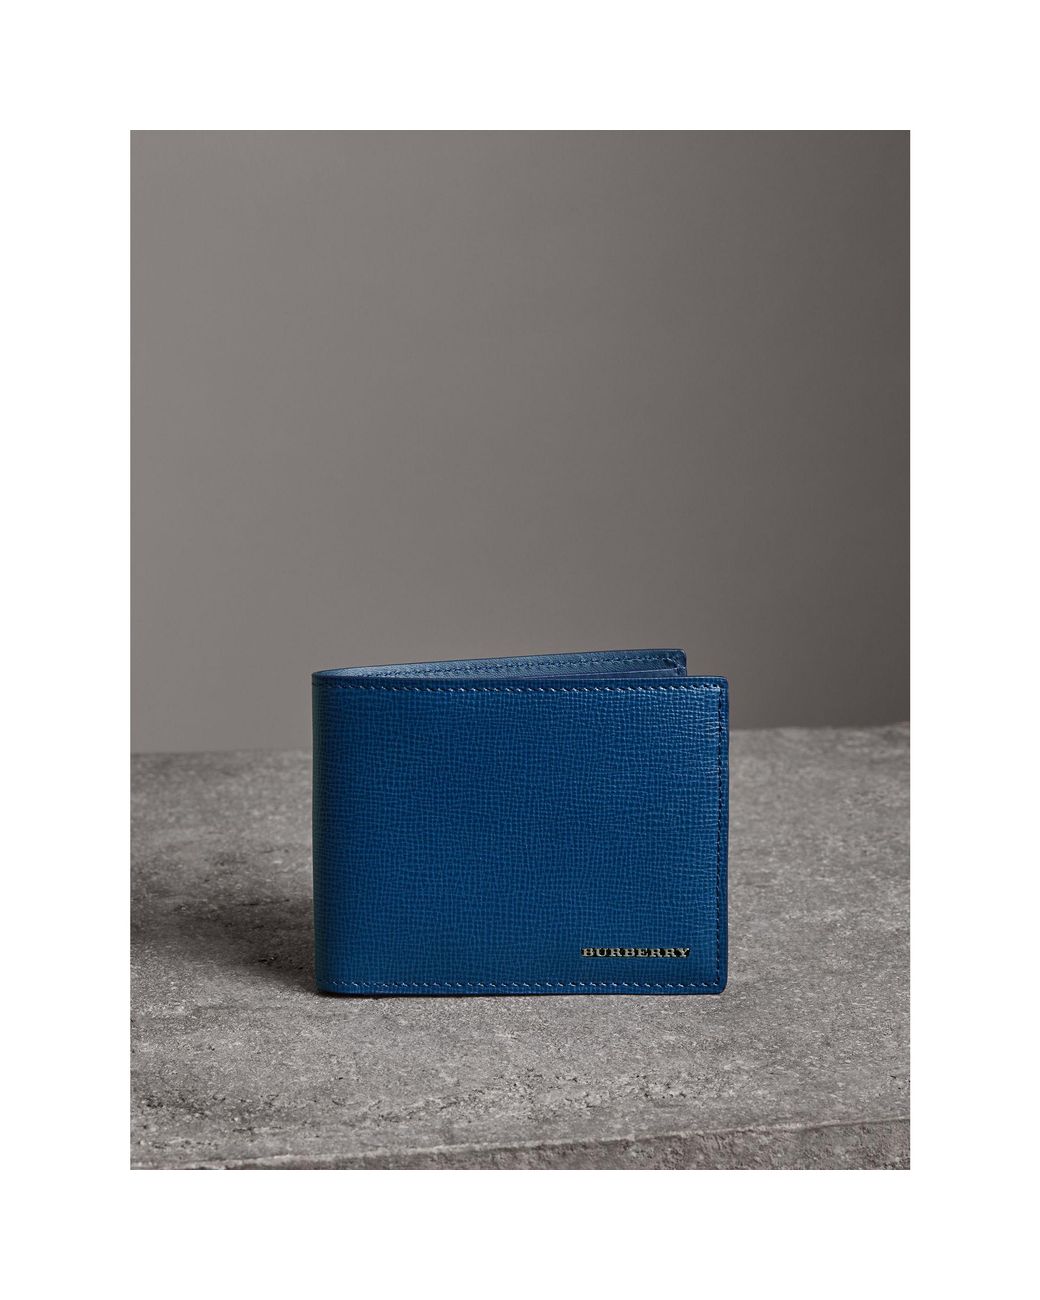 Burberry Grainy Leather Small Tri-fold Wallet In Regency Blue 8018123  5045558964133 - Handbags - Jomashop